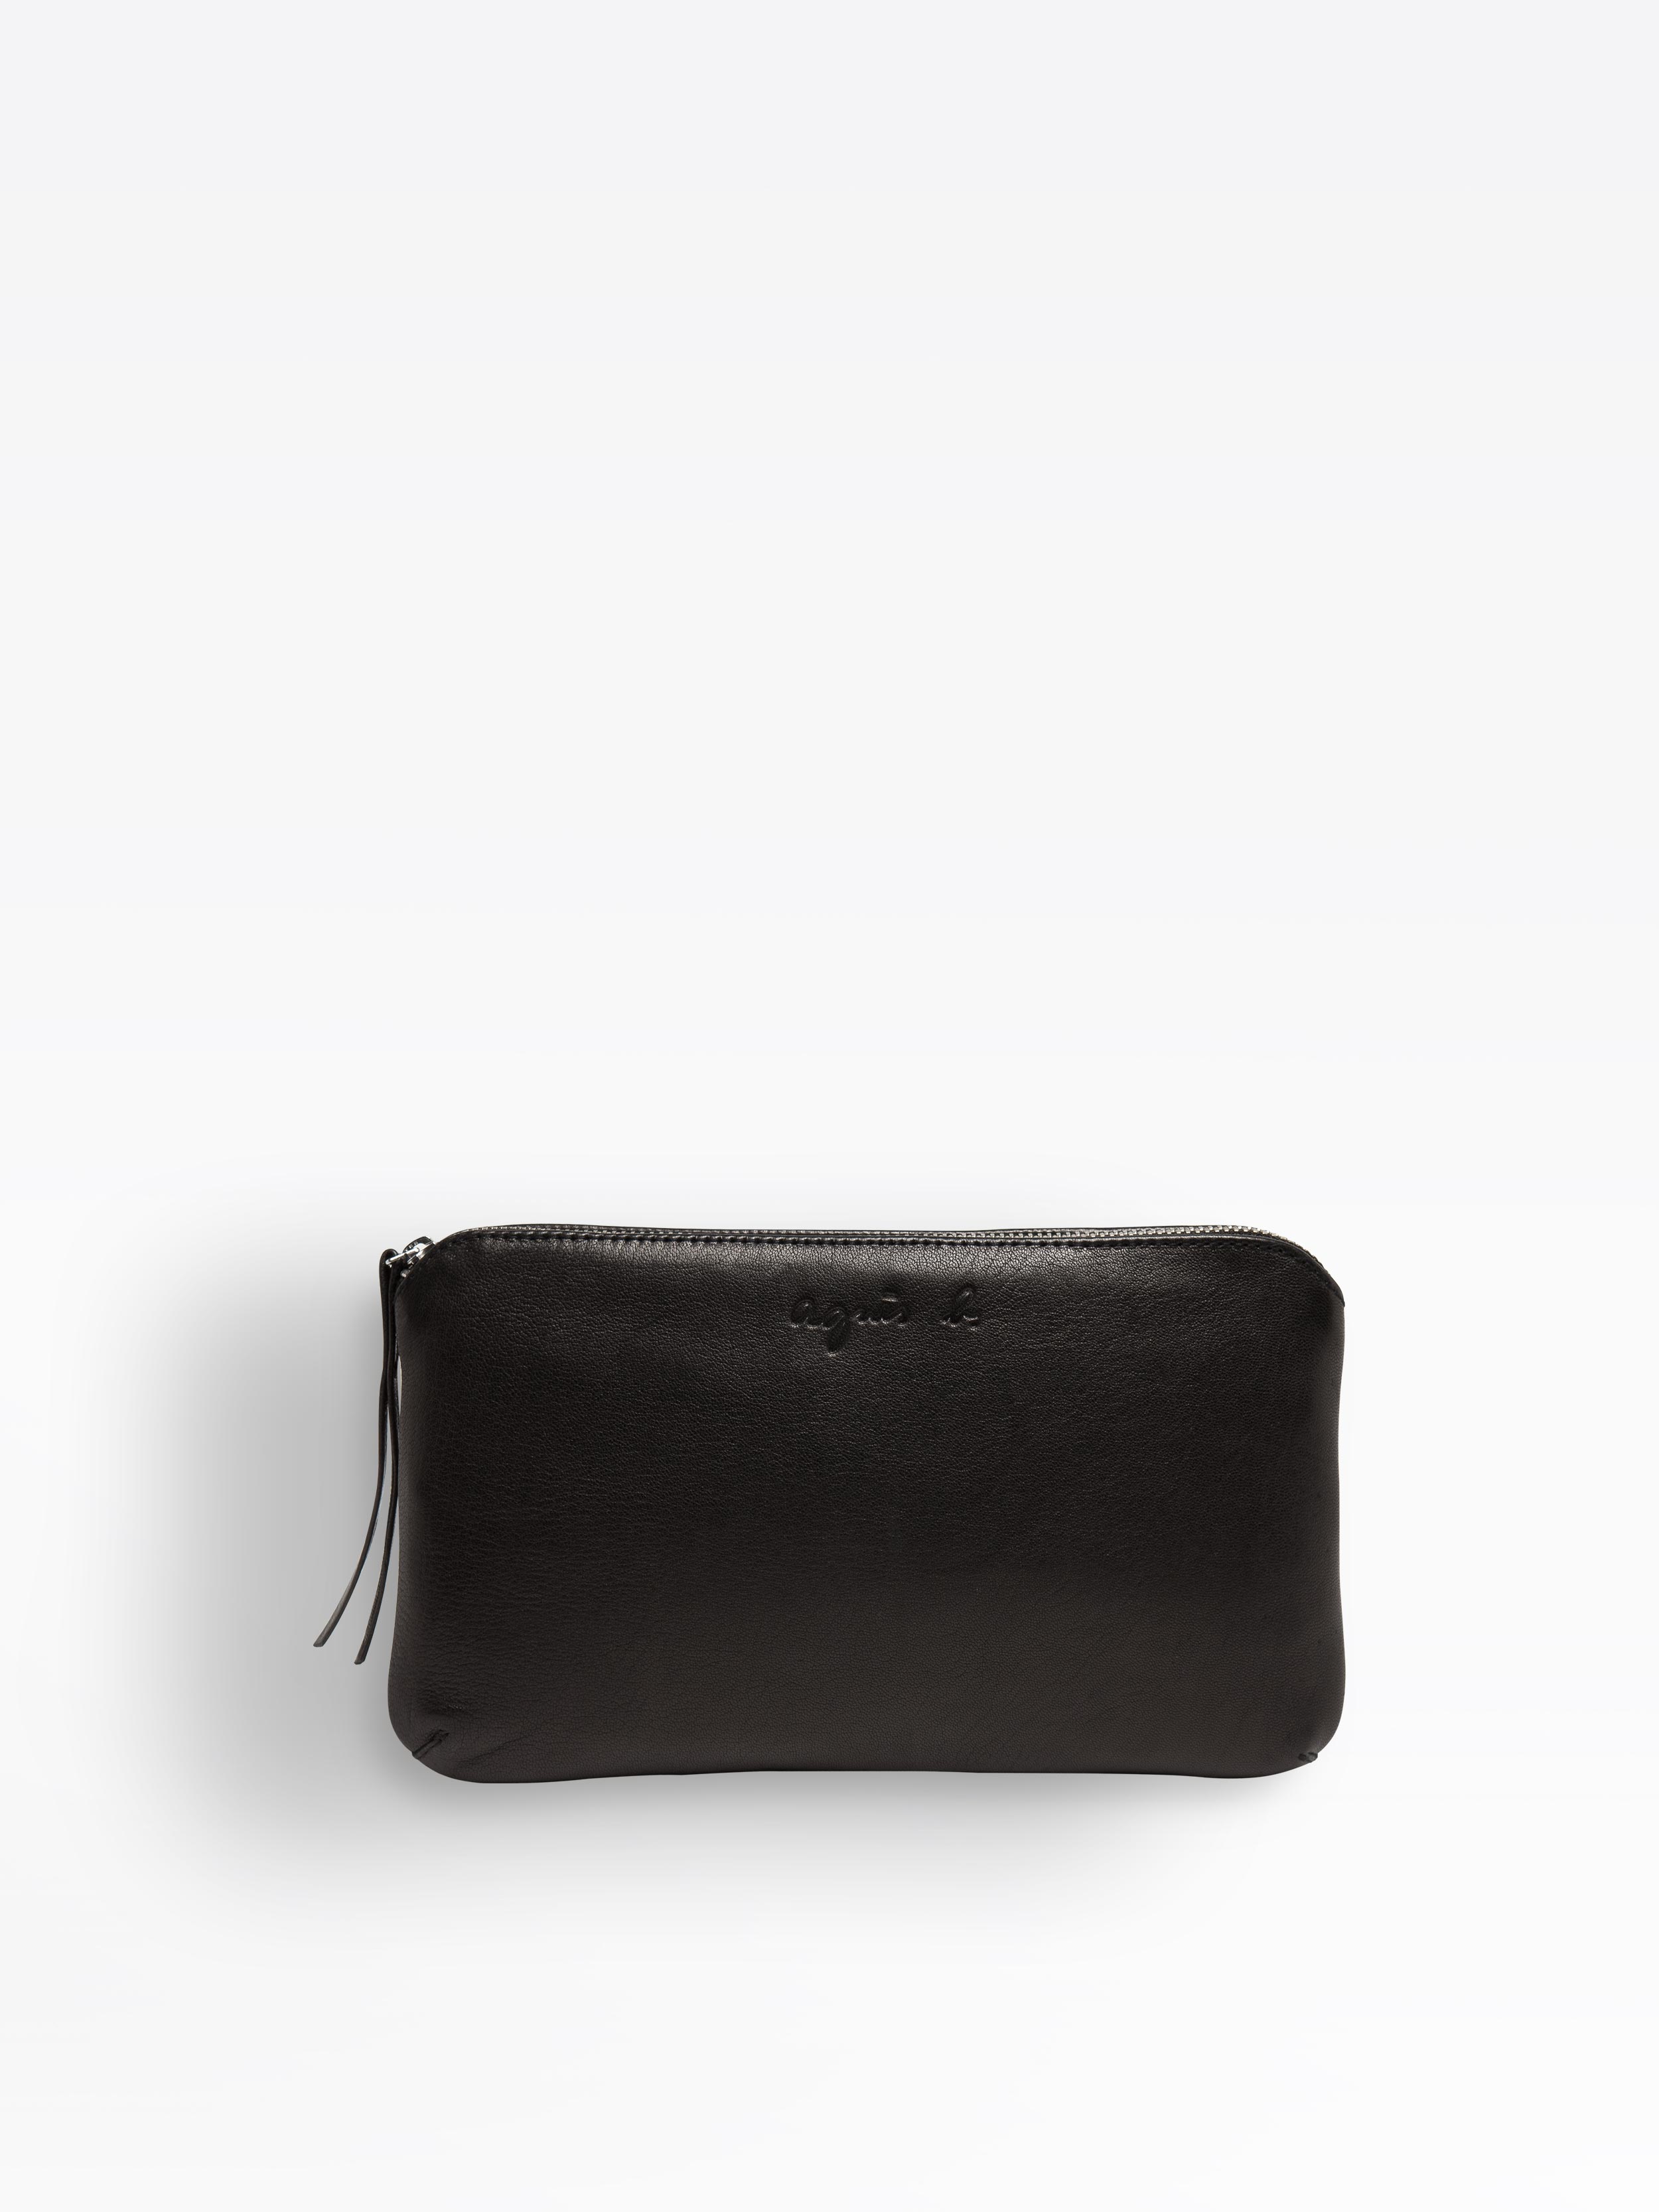 black leather Annissa pouch